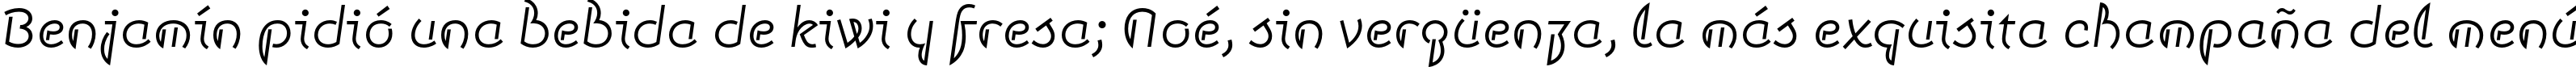 Пример написания шрифтом Smena Light текста на испанском